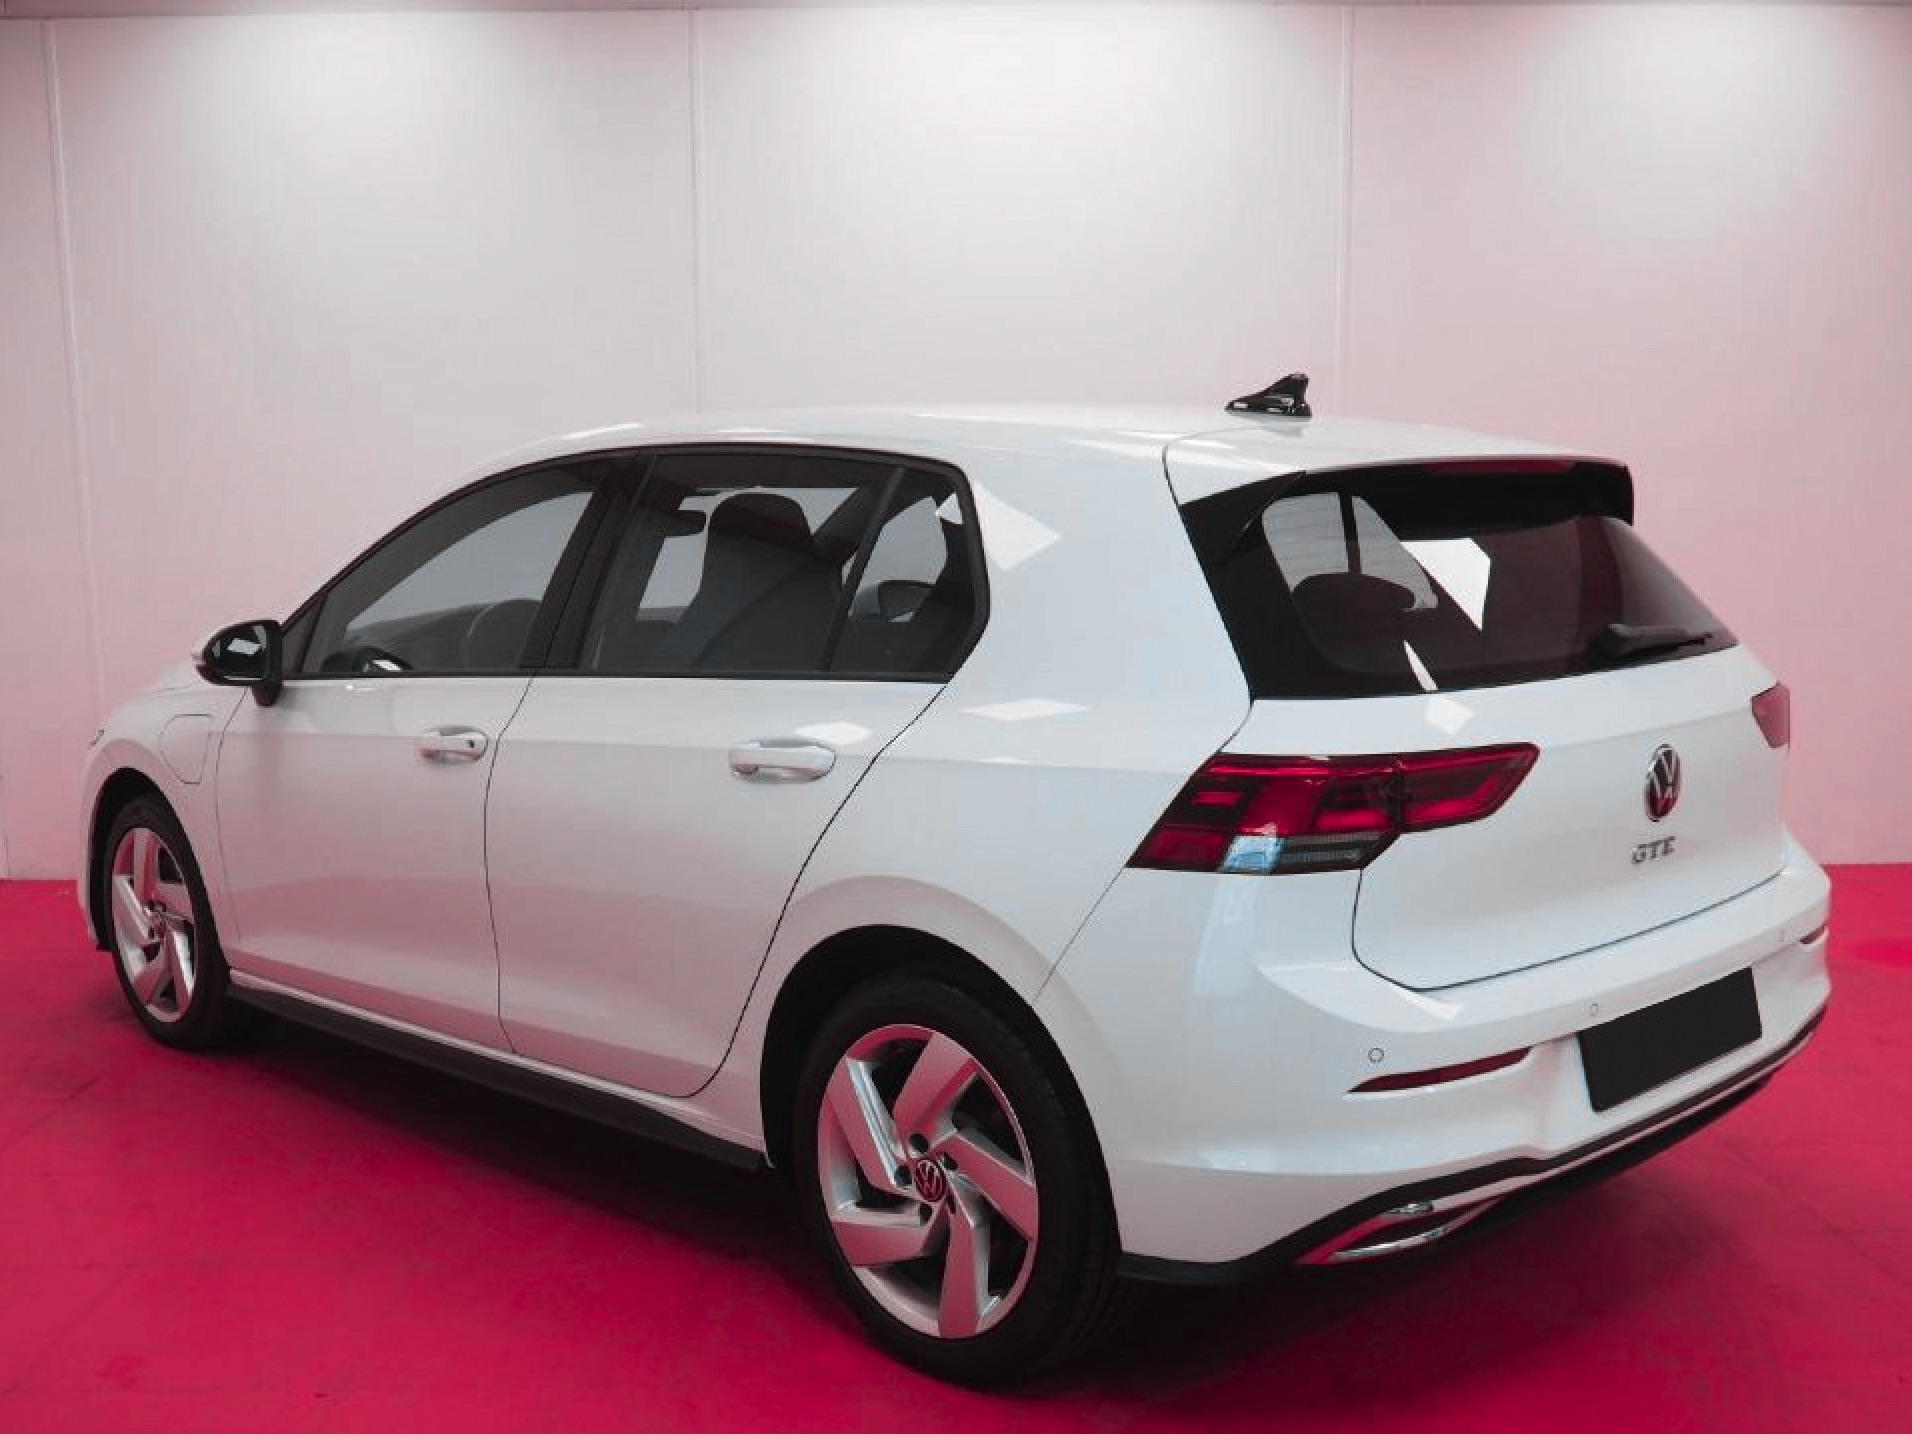 Volkswagen Golf- GTE 1.4TSI DSG - Benzin/Electro Plug-in Hybrid 180kW/245HP - 13kWh battery - White - 17&quot; &quot;Richmond&quot; wheels - 18500 km - 2020.12.